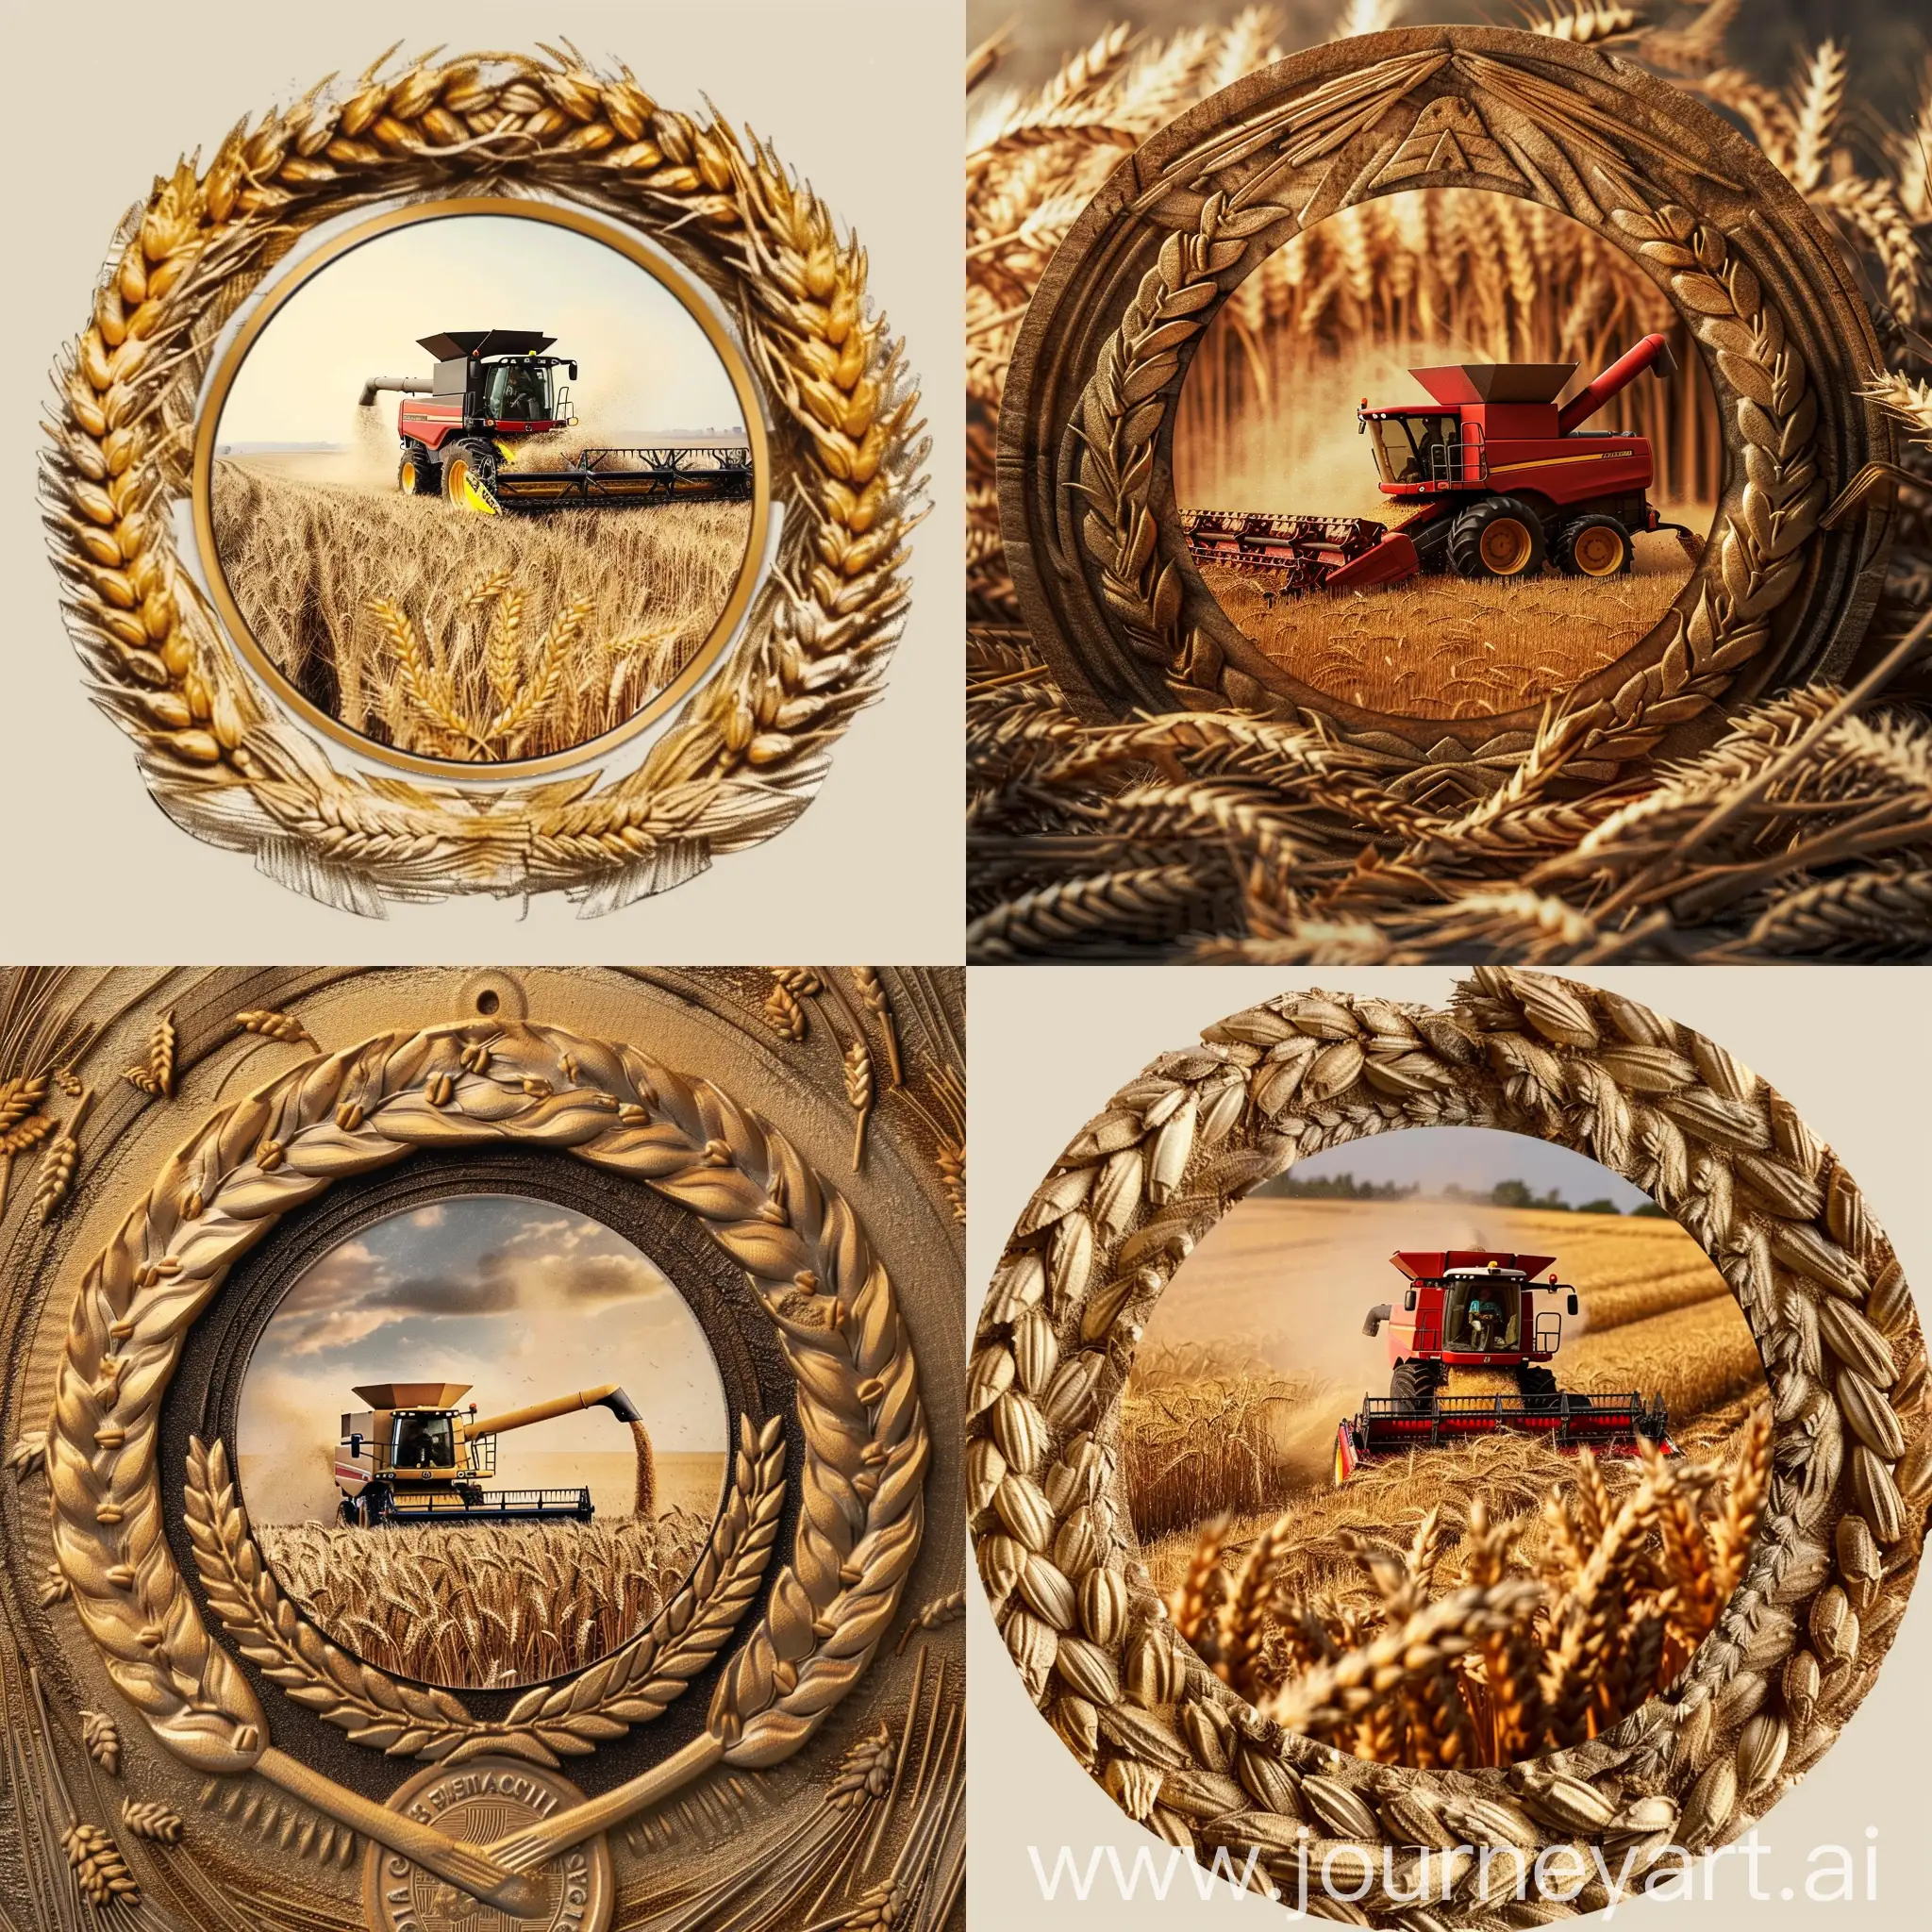 Harvesting-Wheat-Combine-in-Wheat-Field-Emblem